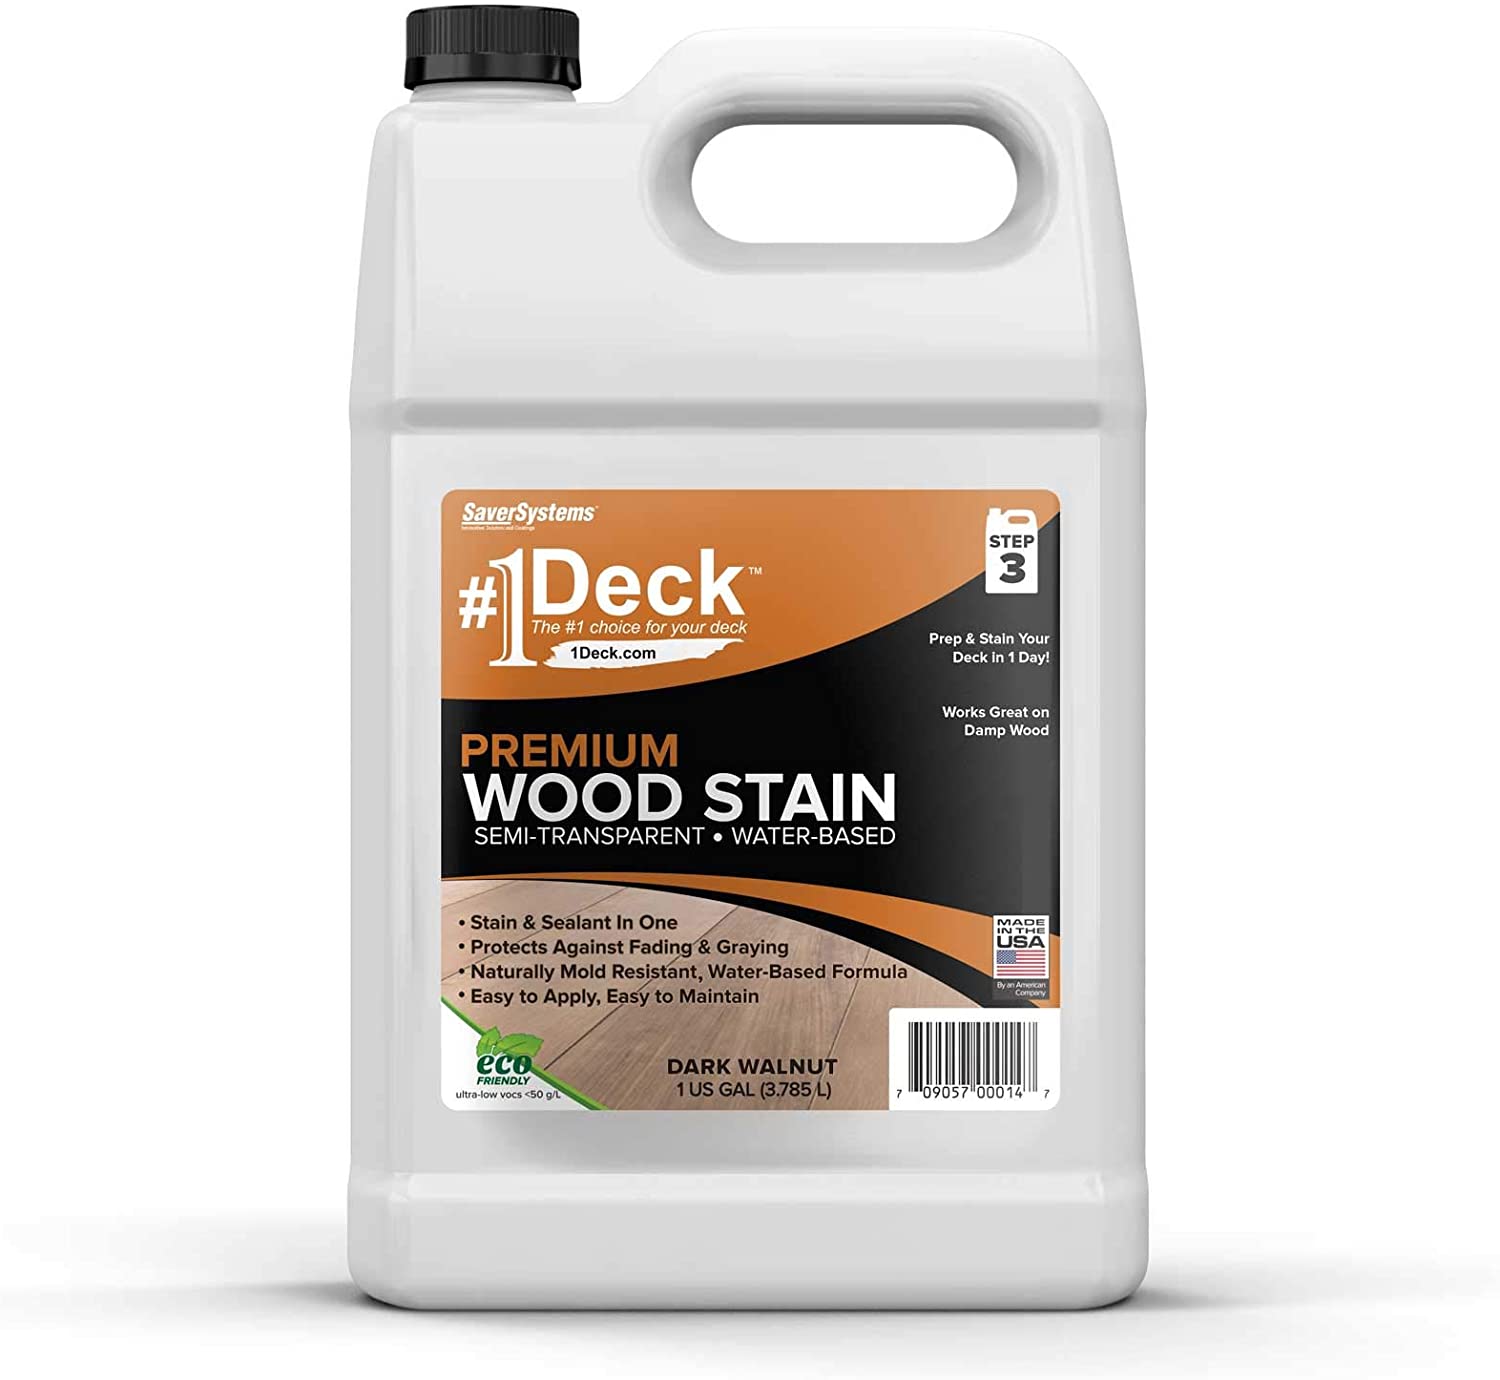 #1 Deck Premium Semi-Transparent Wood Stain for Decks review